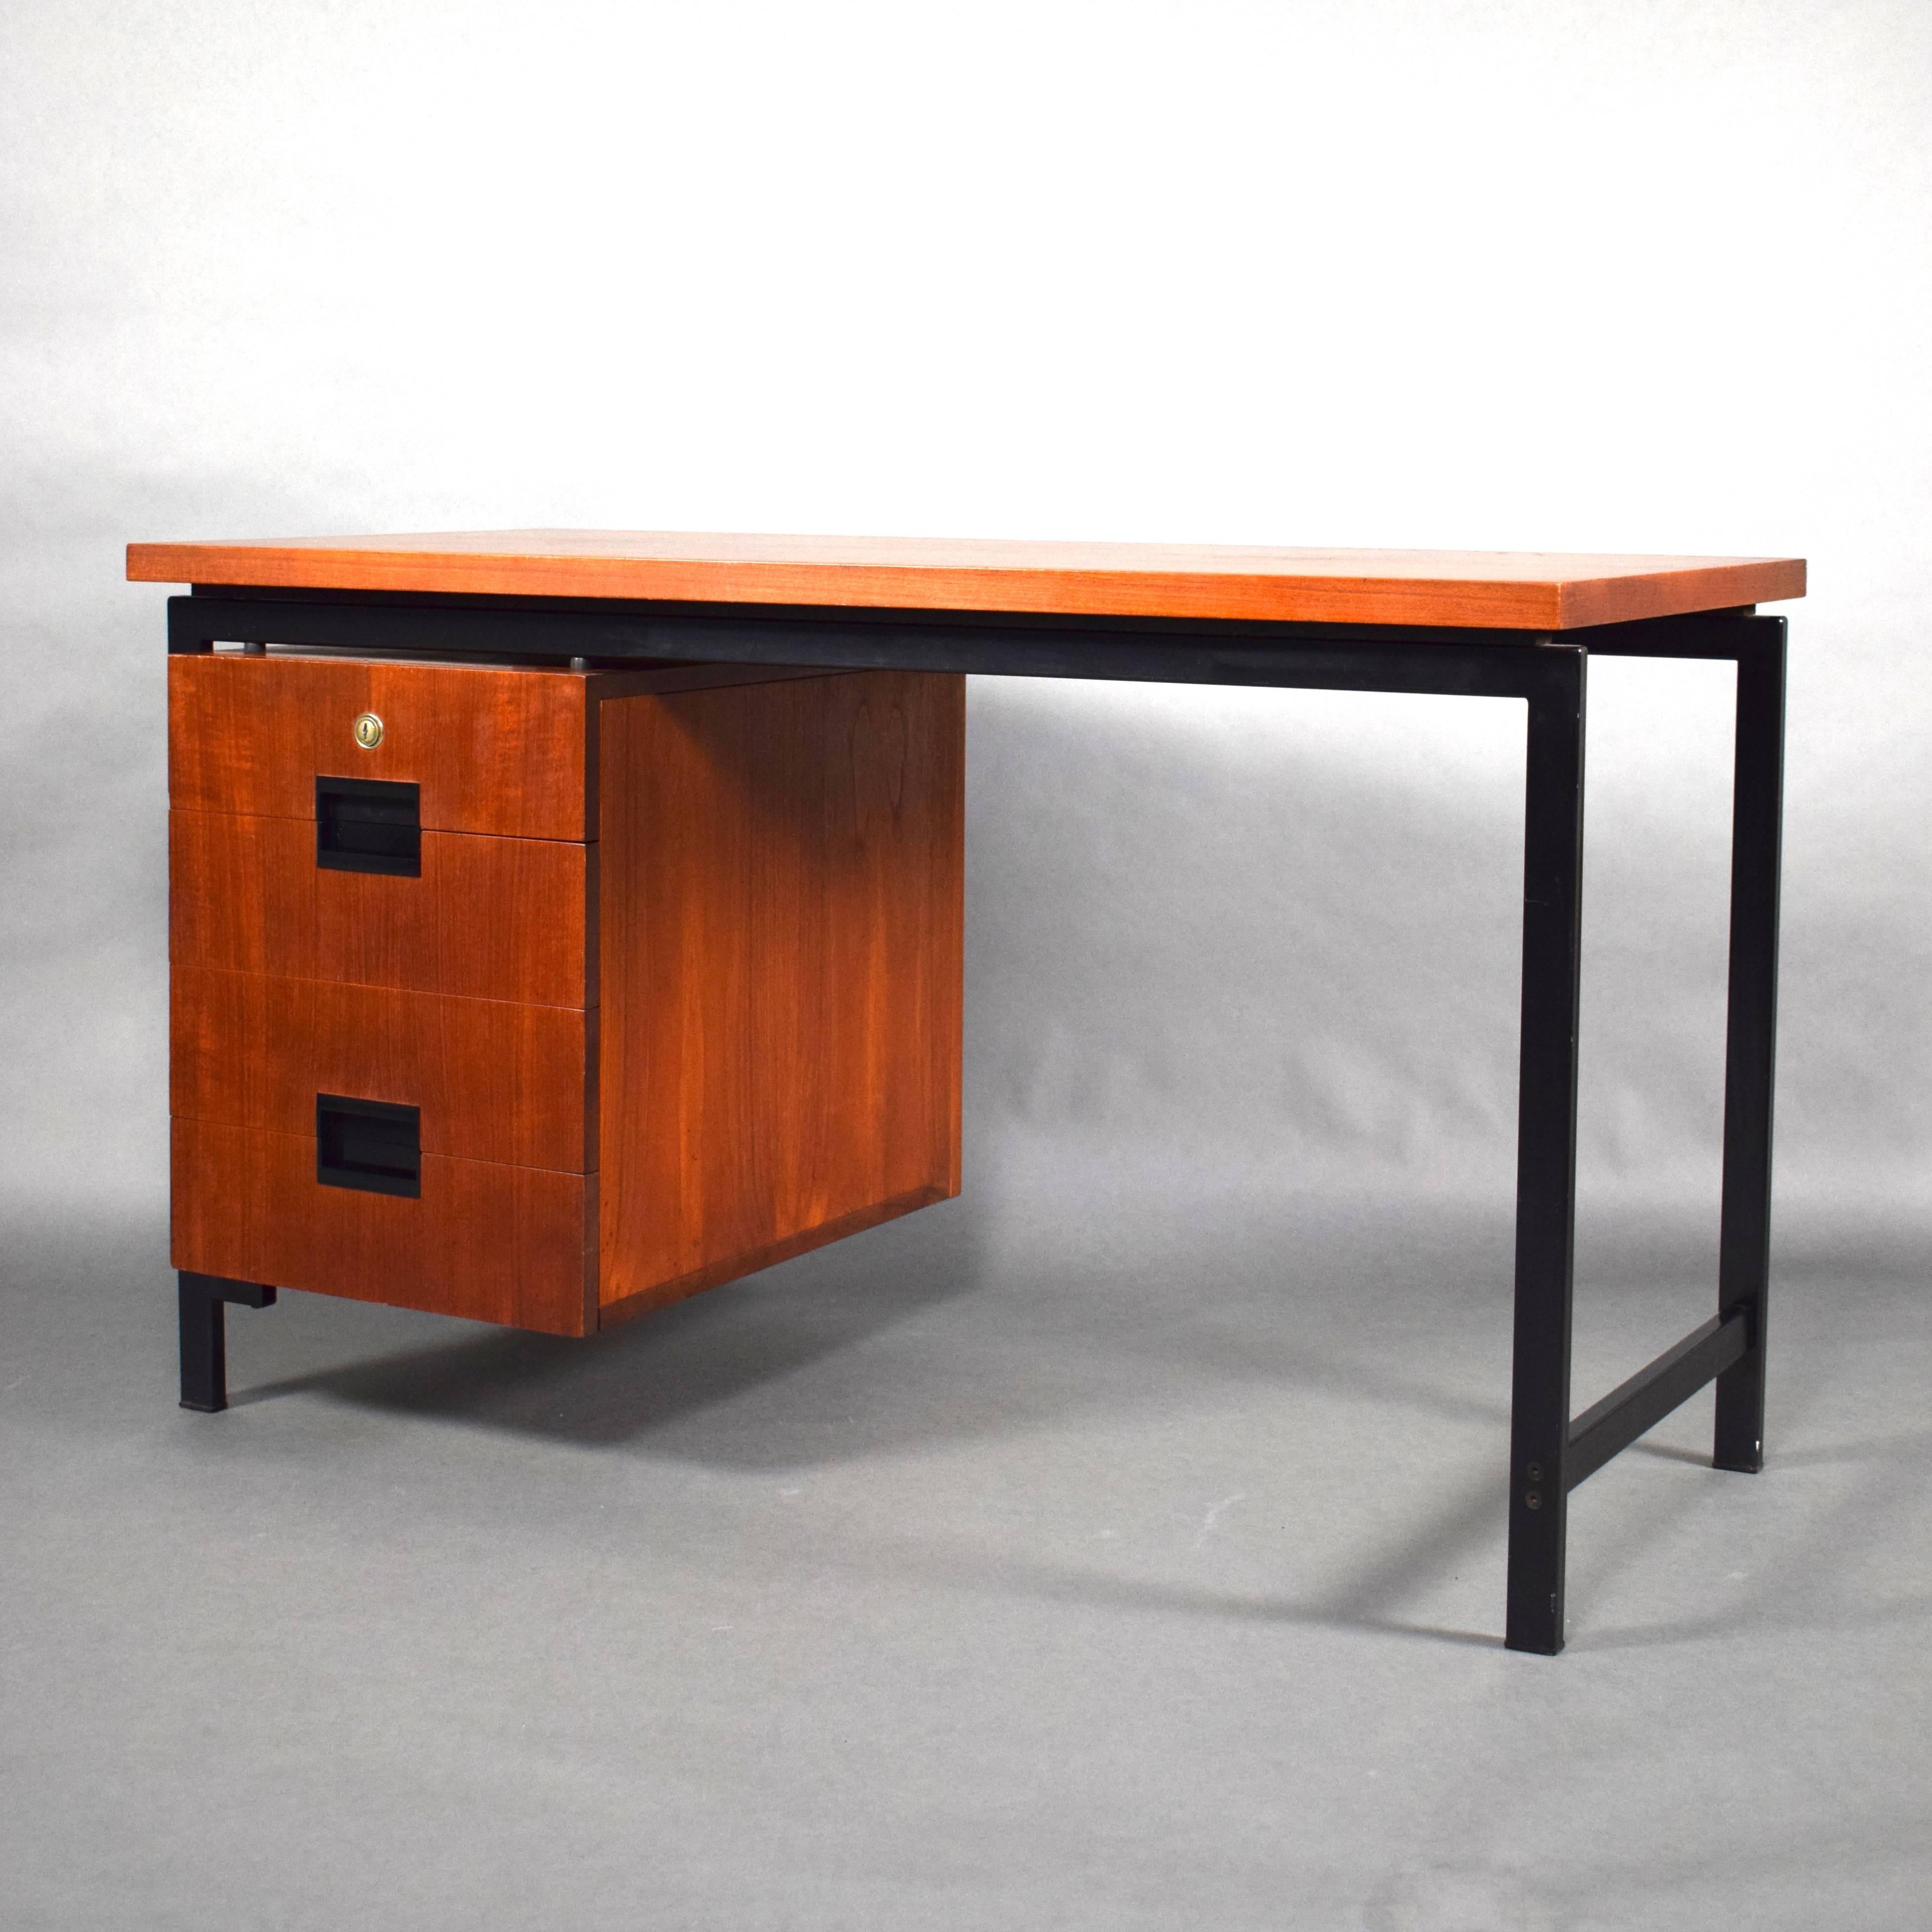 Cees Braakman for Pastoe model EU-01 Japanese Series desk in teak and metal and bent plywood drawers.

Designer: Cees Braakman

Manufacturer: PASTOE

Country: Netherlands

Model: EU-01 Japanese Series desk

Designed in: 1950s

Date of